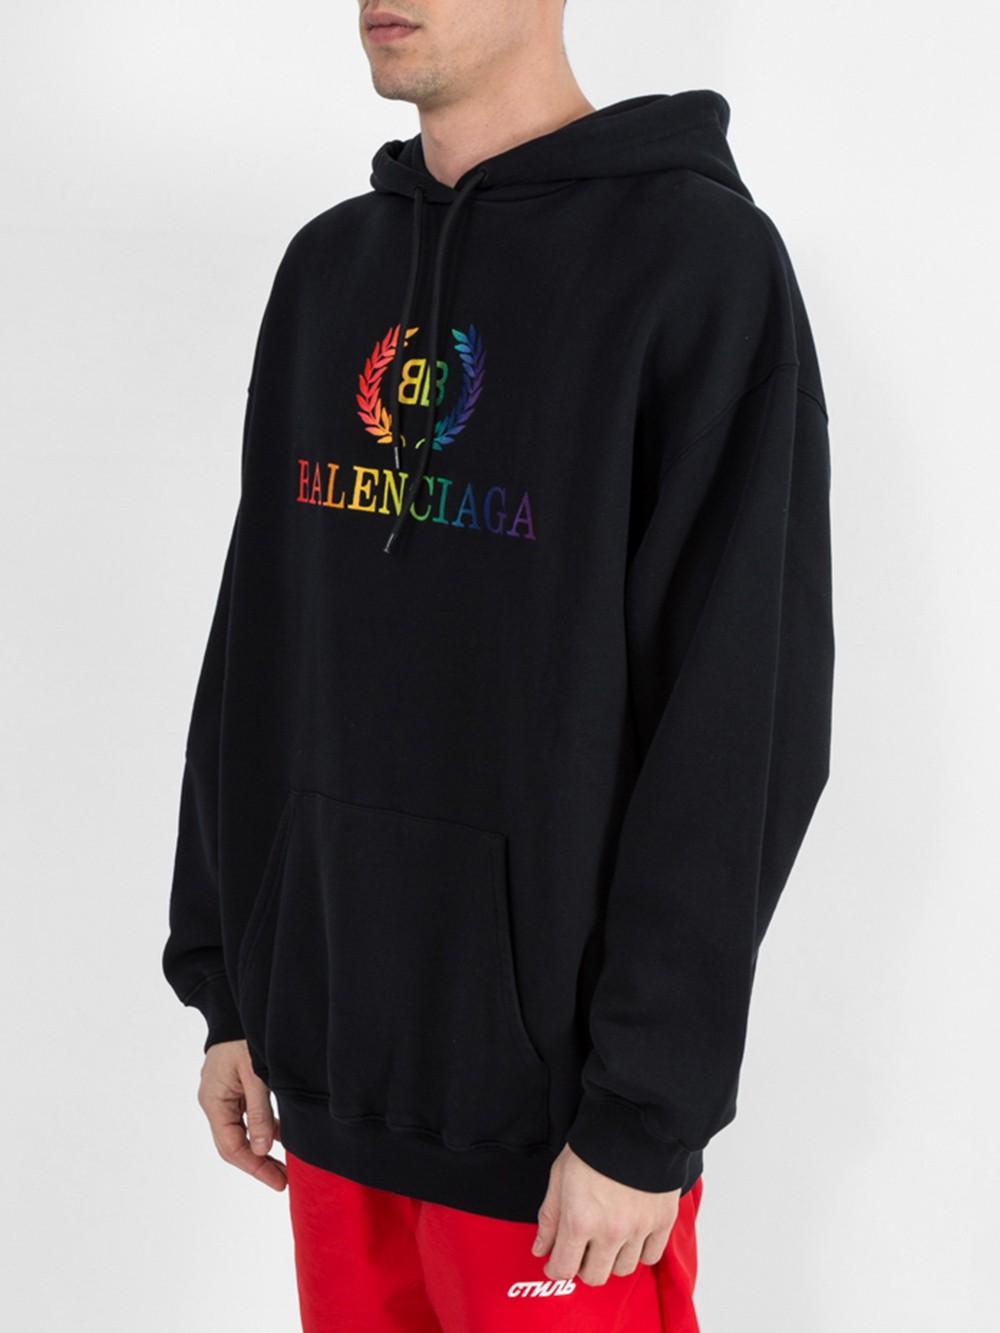 Balenciaga Cotton Rainbow Logo Hoodie for Men - Lyst